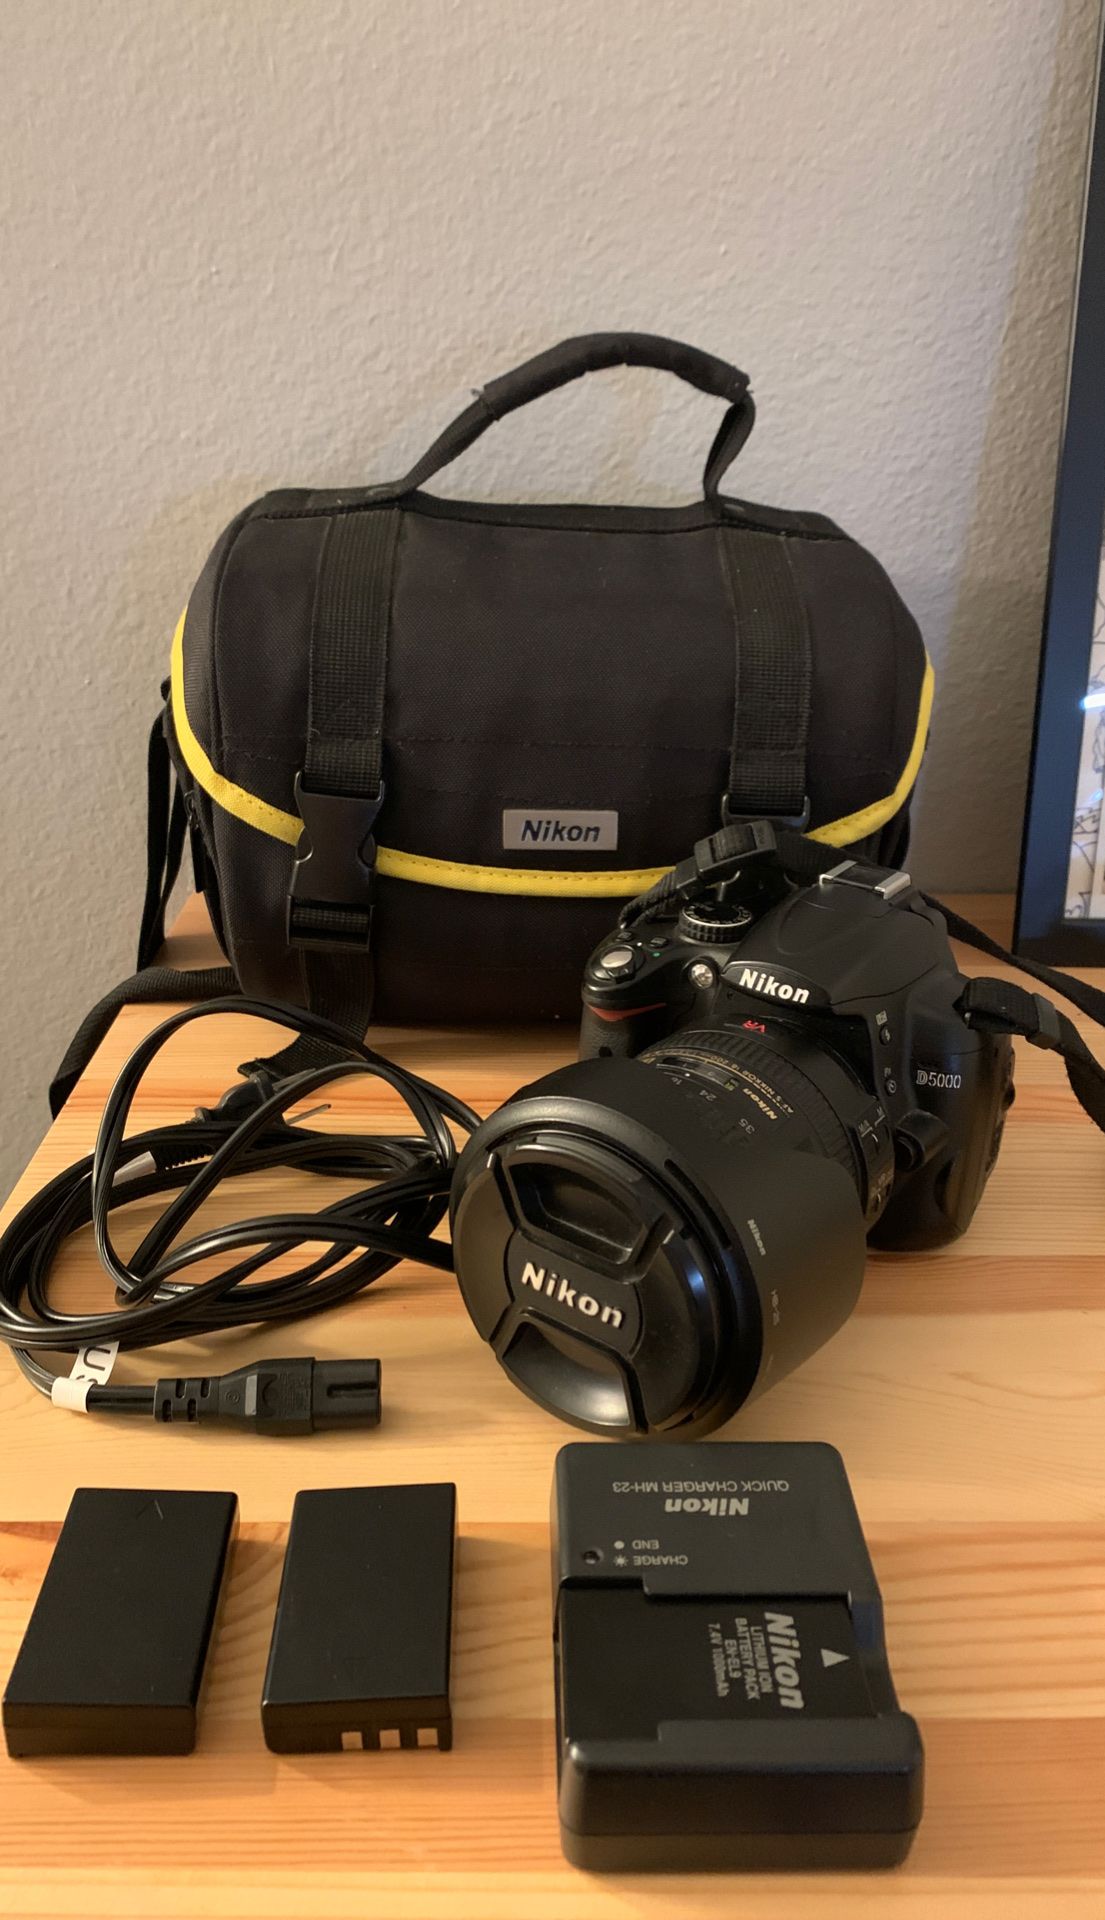 Nikon D5000 DSLR Camera Package